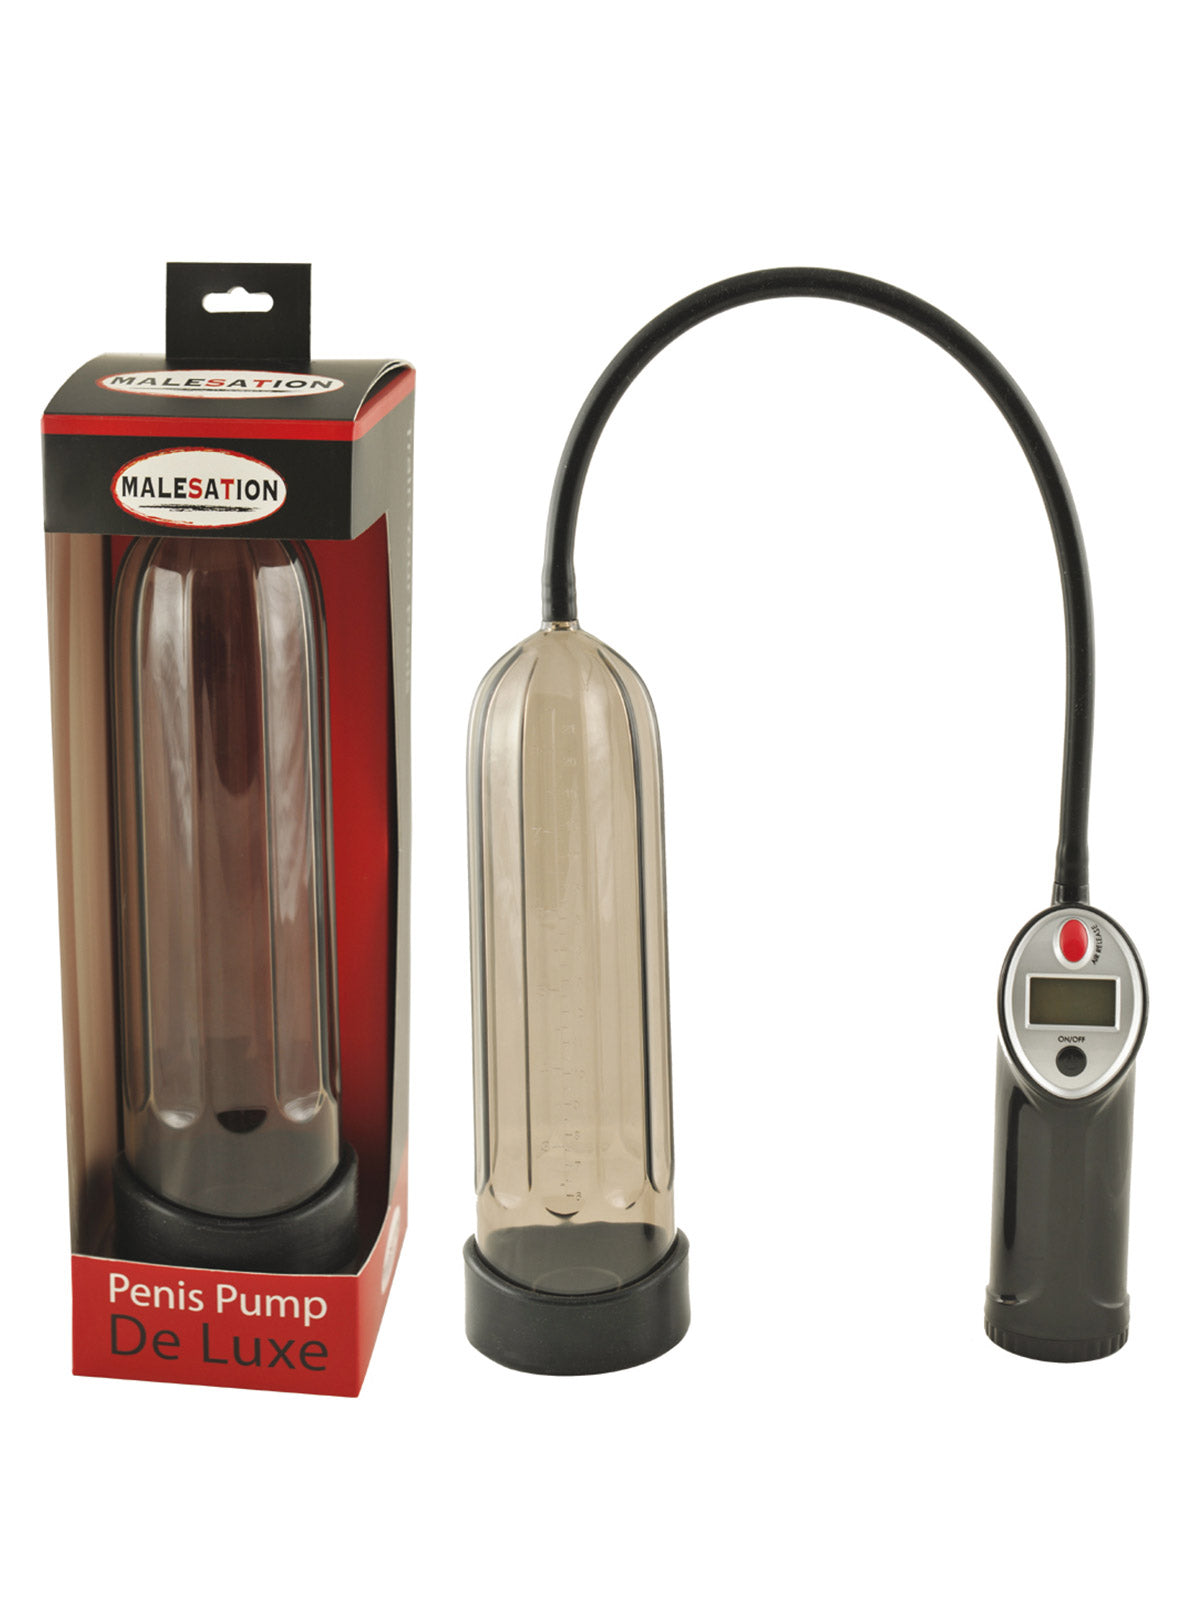 Penis Pump de Luxe by Malesation